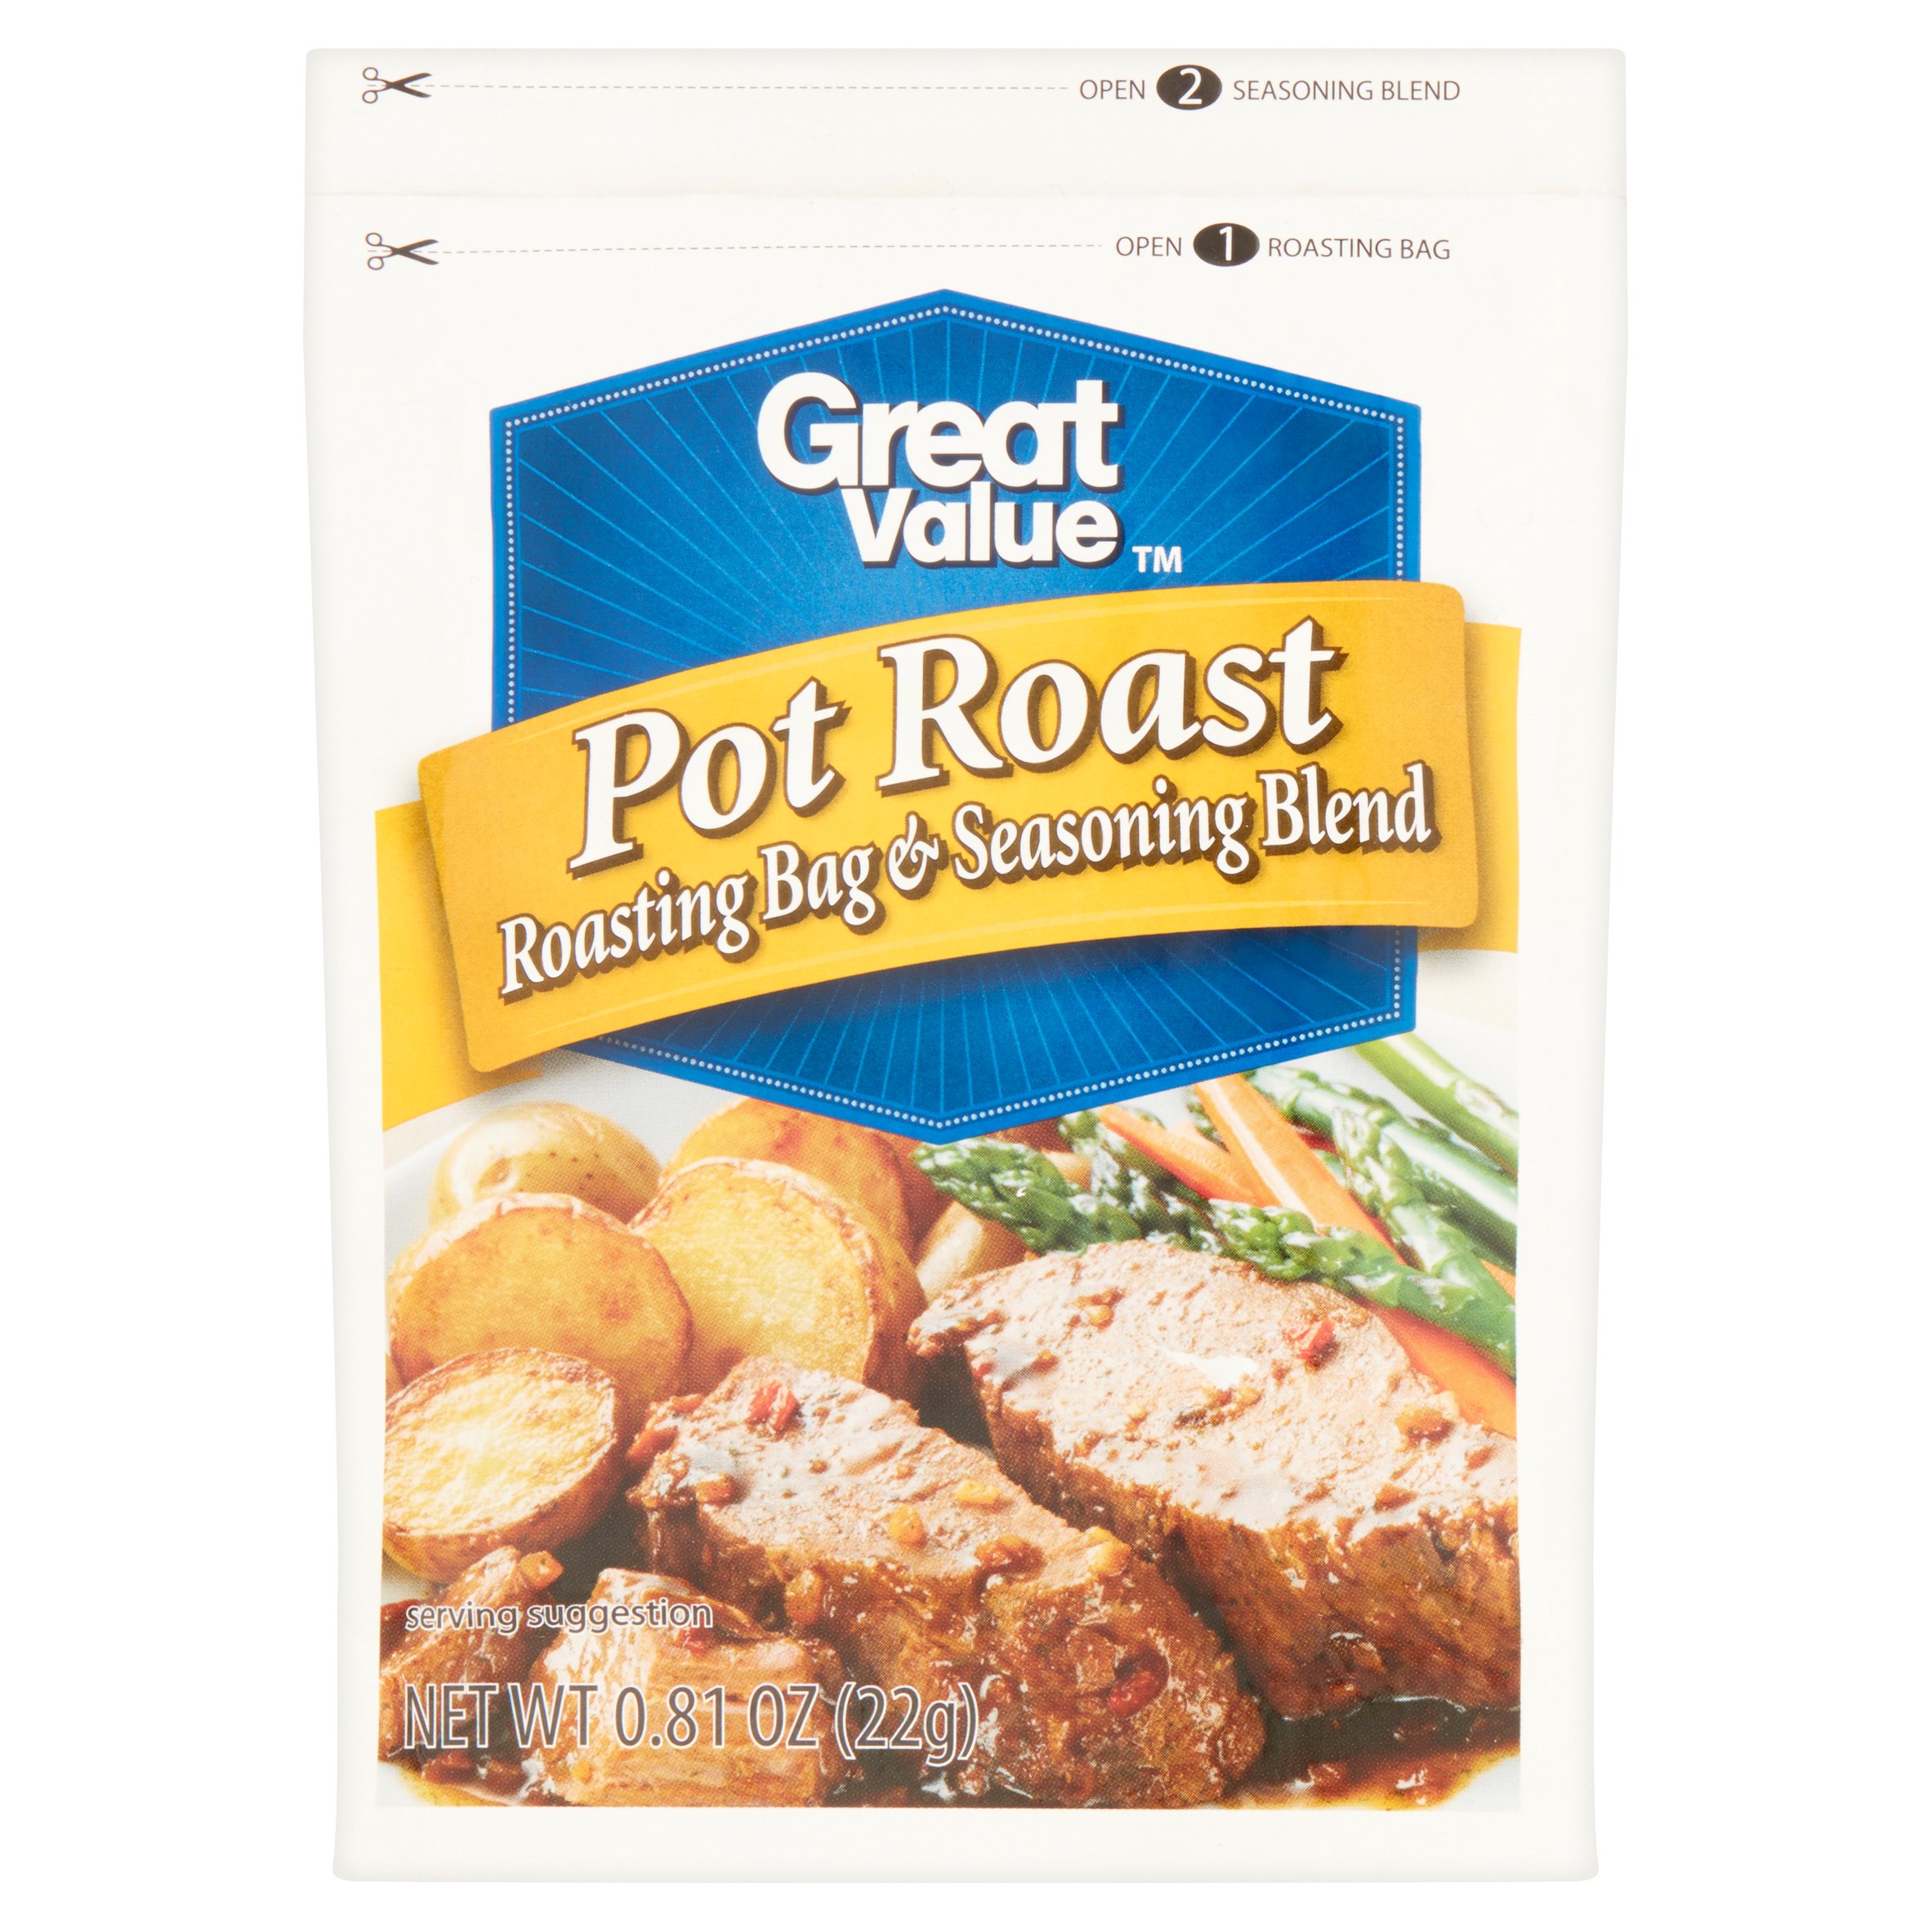 (3 Pack) Great Value Pot Roast Roasting Bag & Seasoning Blend, 0.81 Oz Image